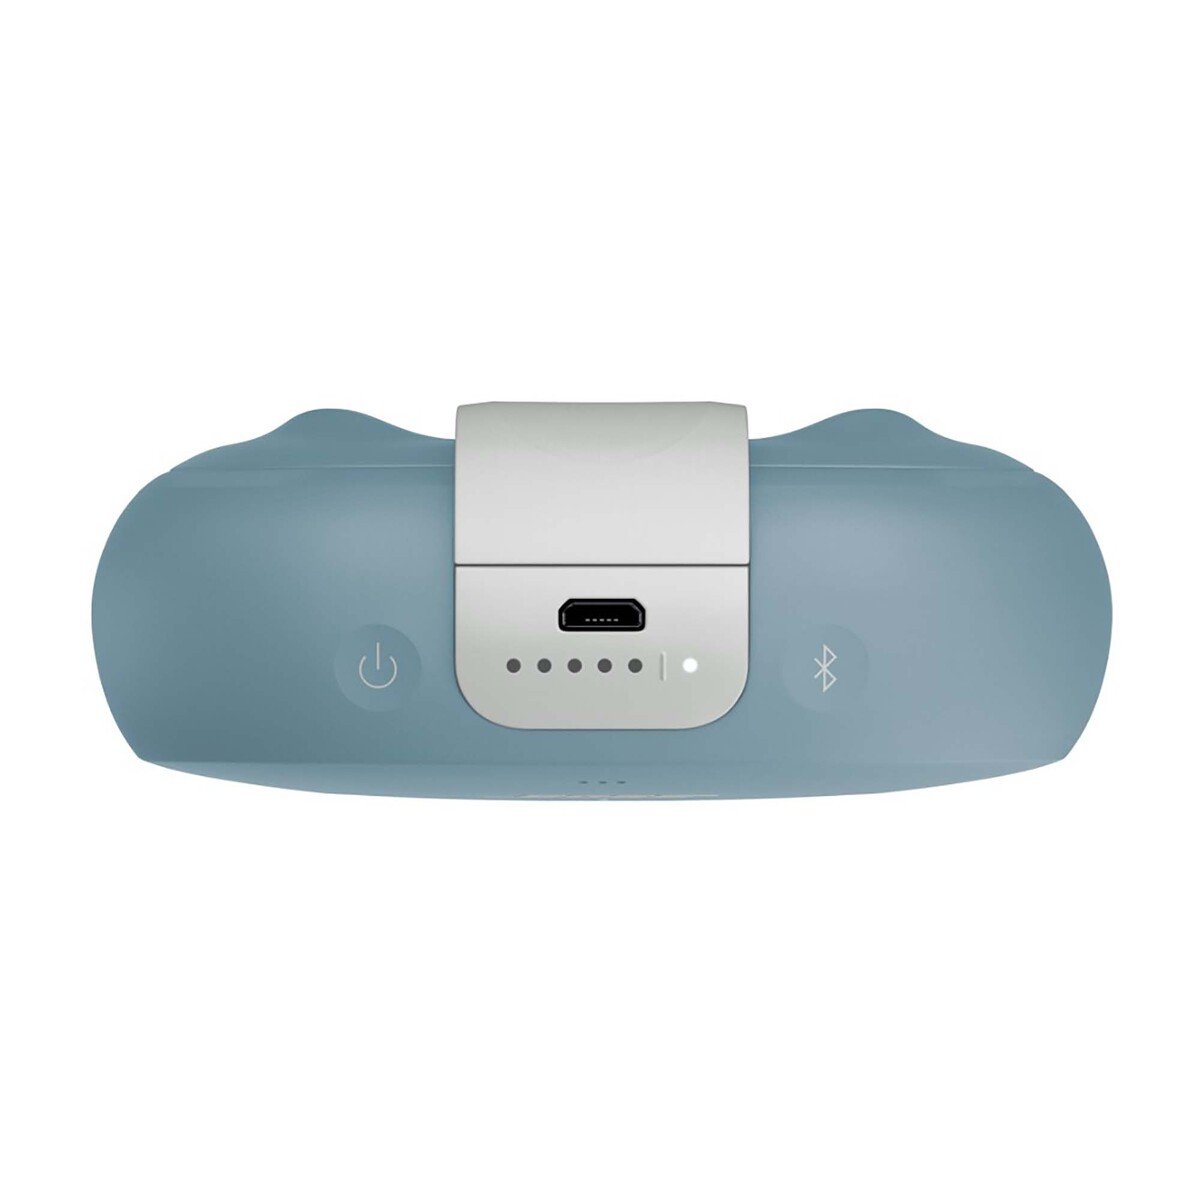 Bose SoundLink Micro Bluetooth speaker 783342-0300 Stone Blue